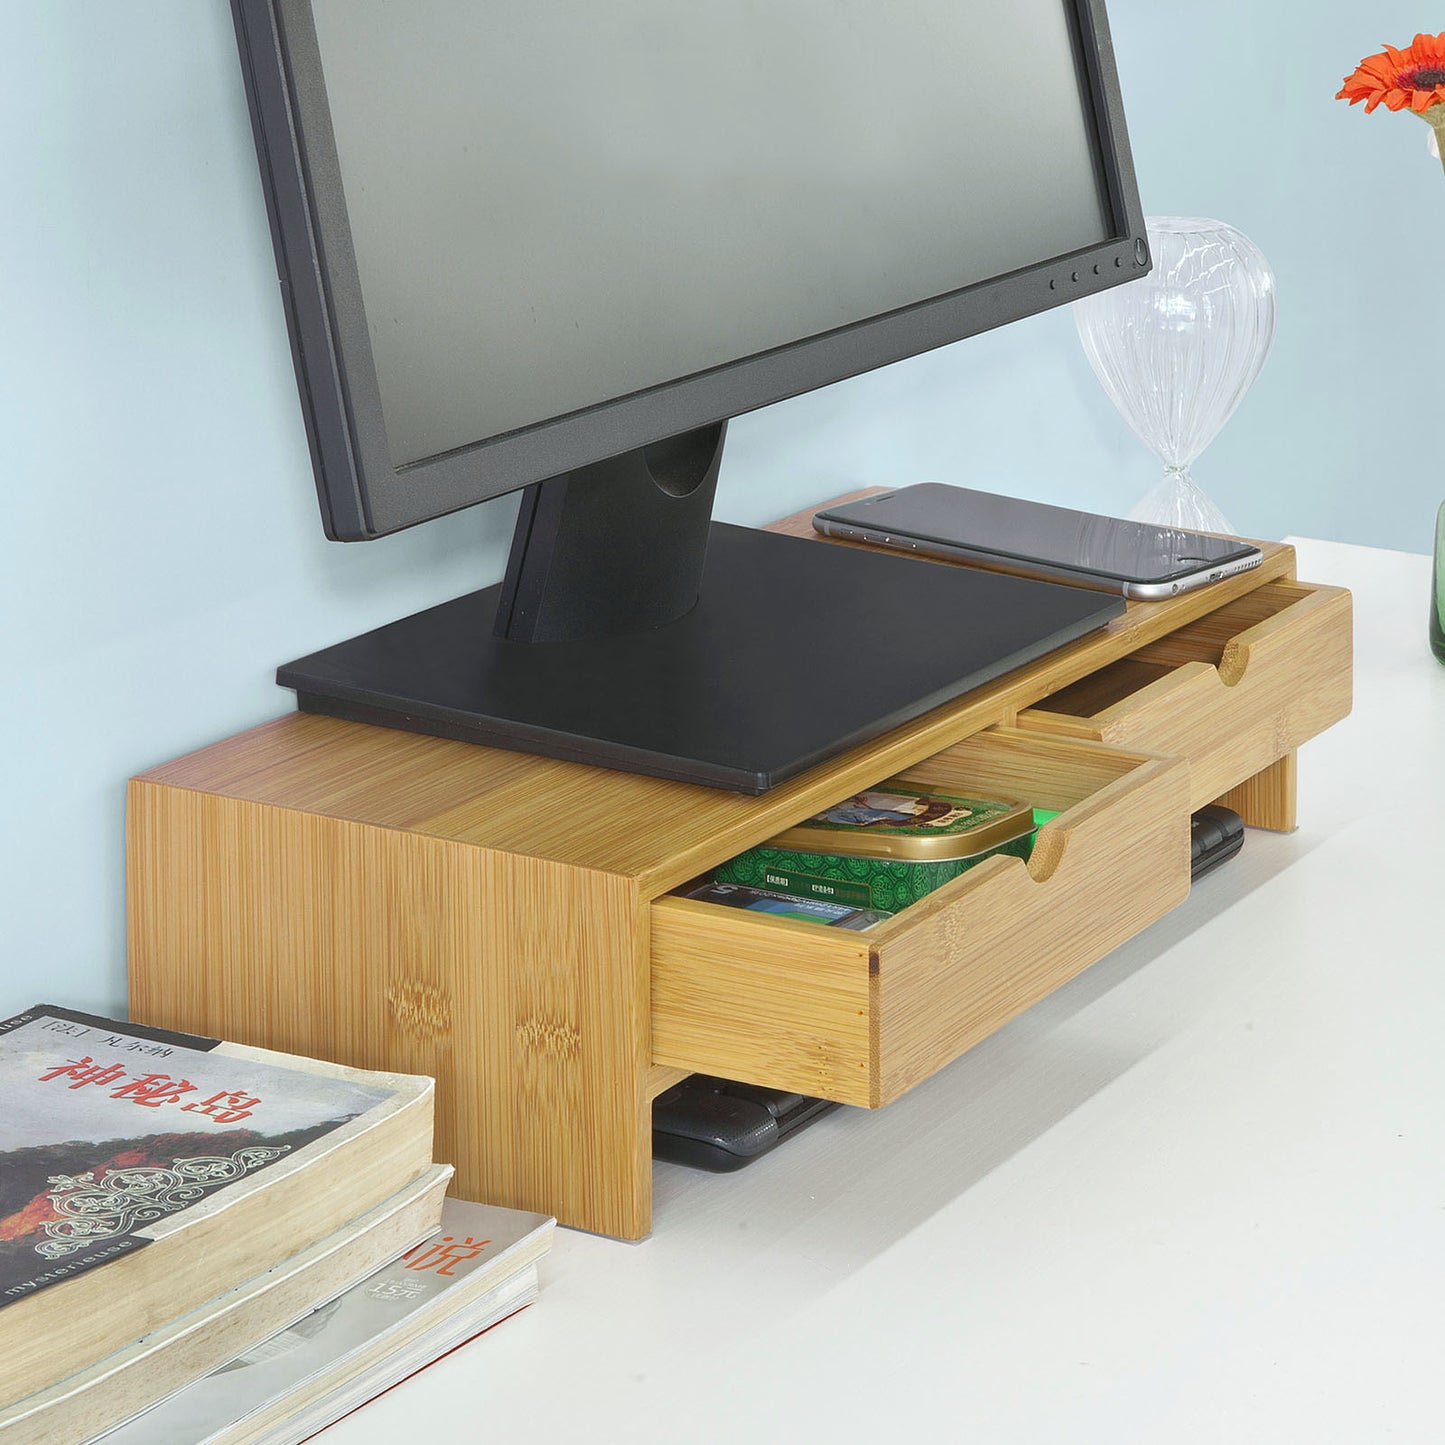 SoBuy FRG198-N Bamboo Monitor Stand, Monitor Riser, Desk Organiser with Drawers